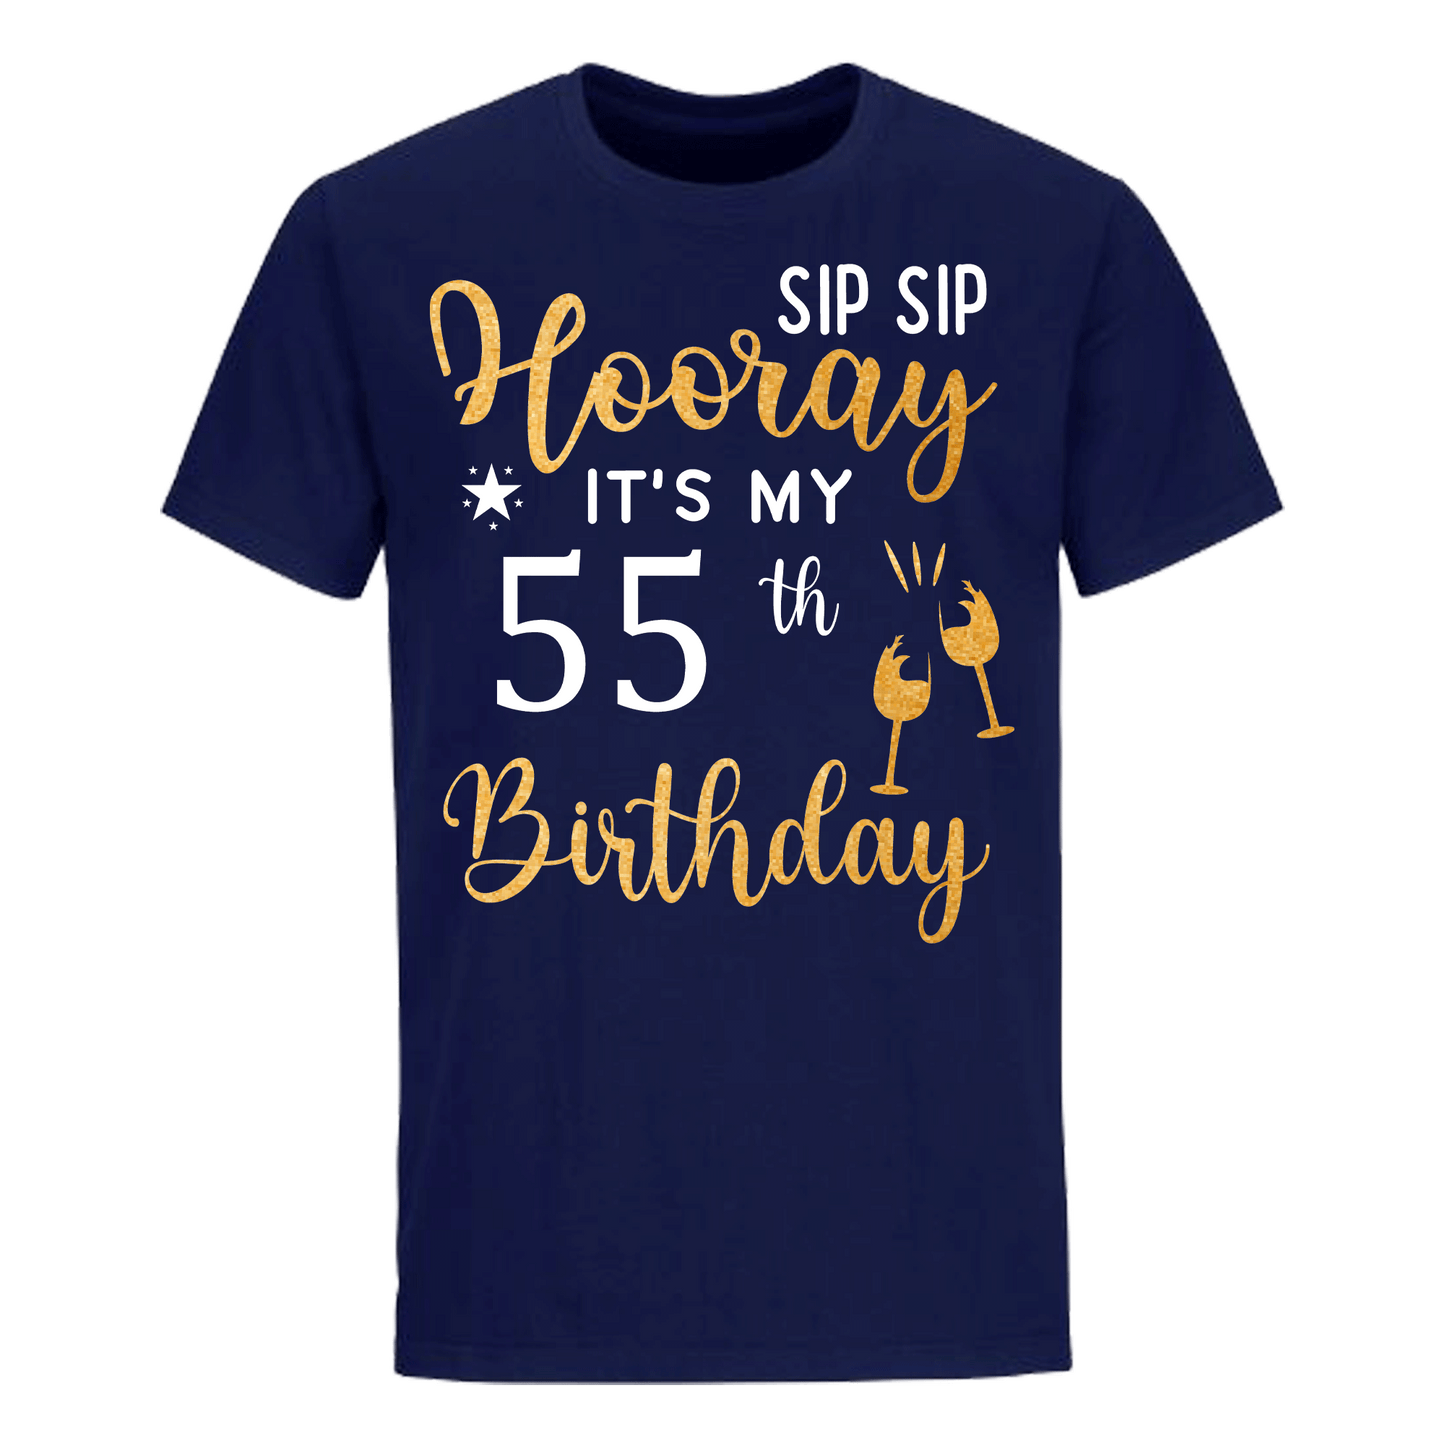 HOORAY IT'S MY 55TH BIRTHDAY SHIRT